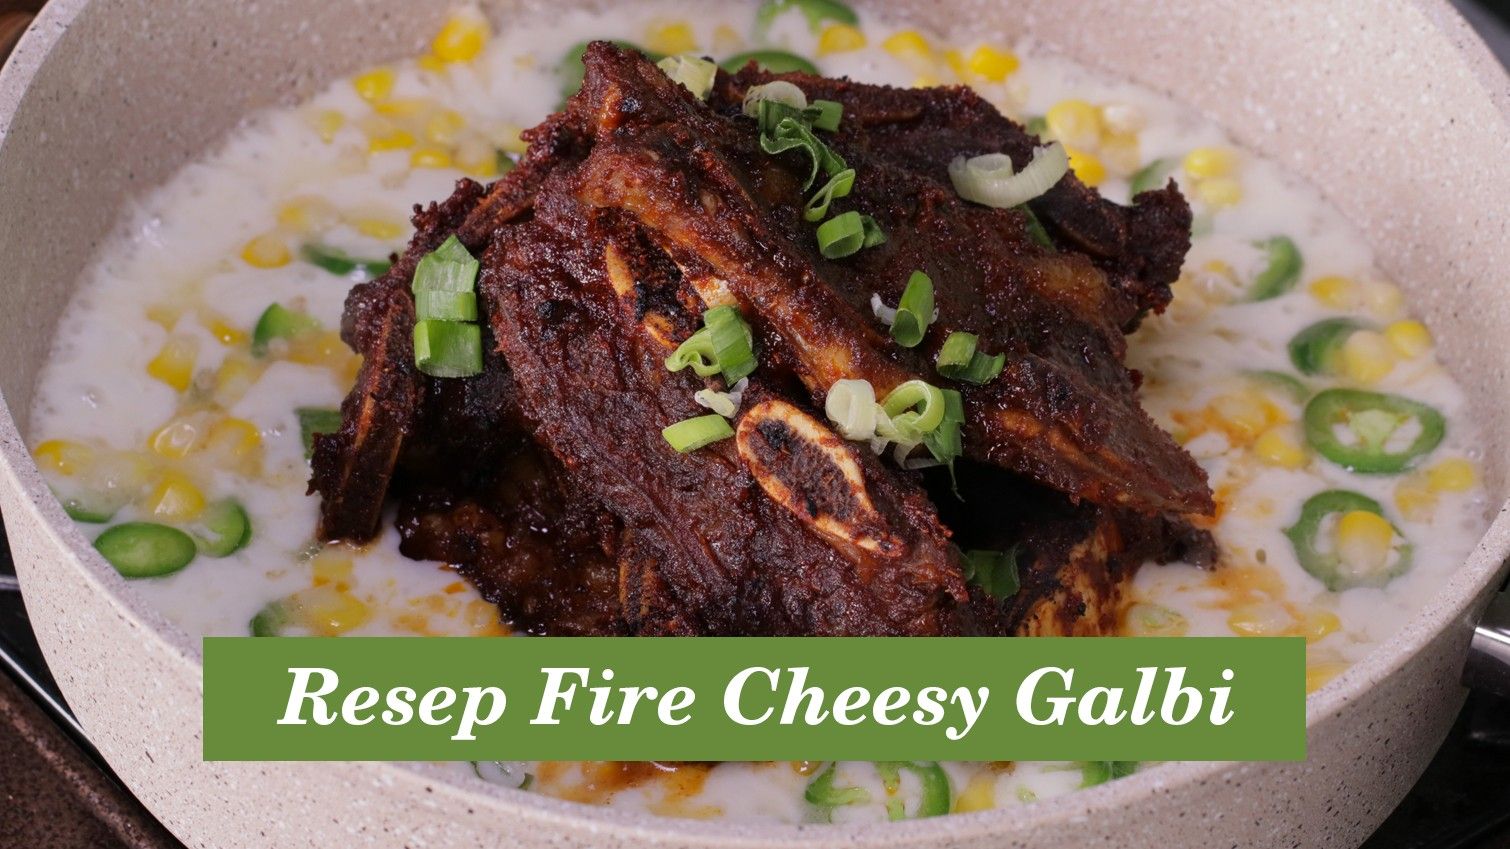 Resep Fire Cheesy Galbi khas Korea, Pedas dan Gurih!